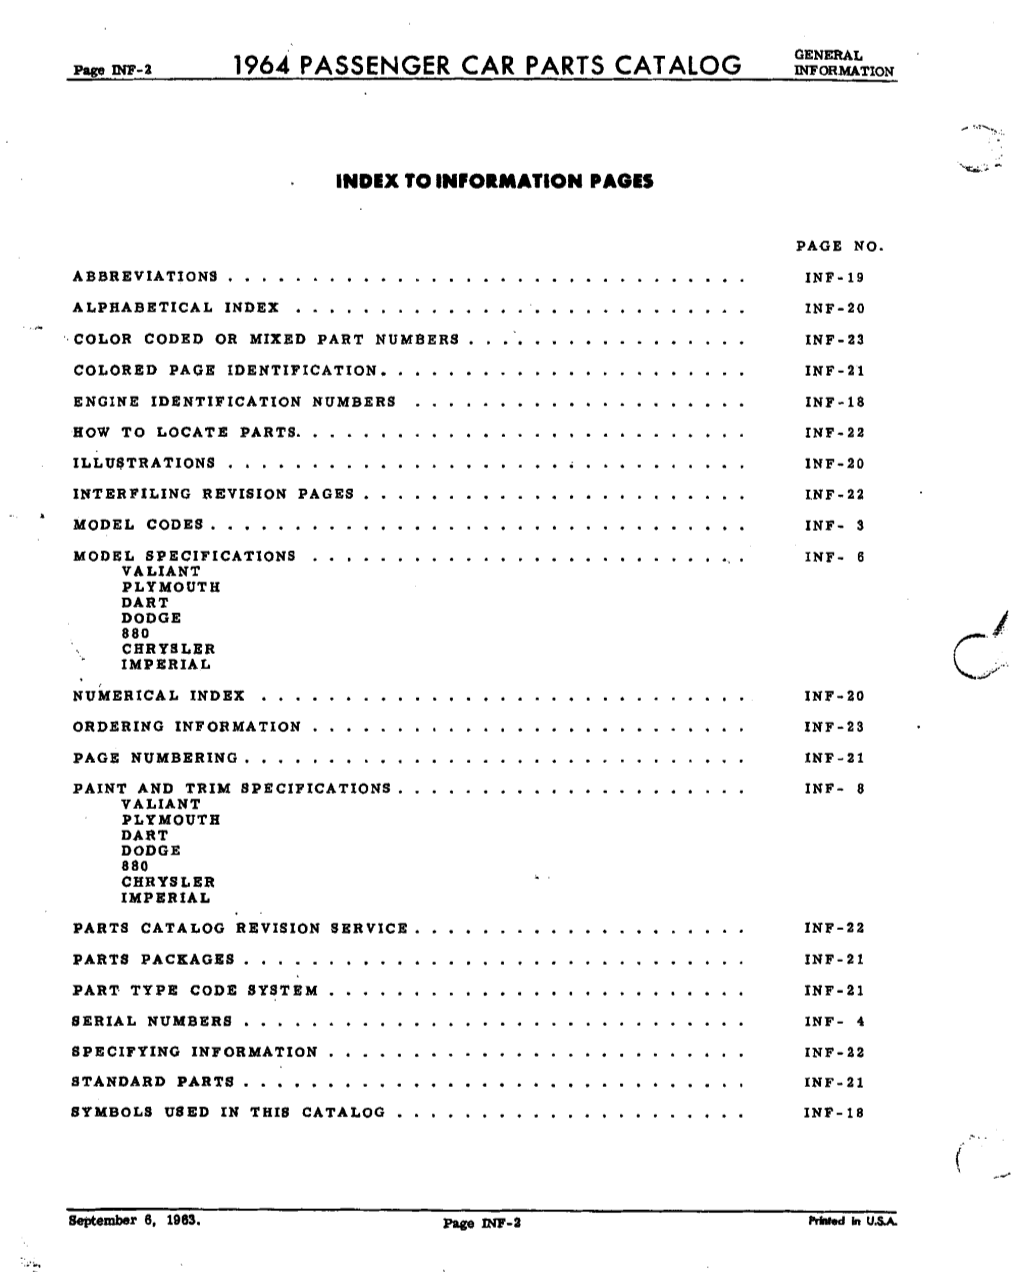 Passenger Car Parts Catalog Information